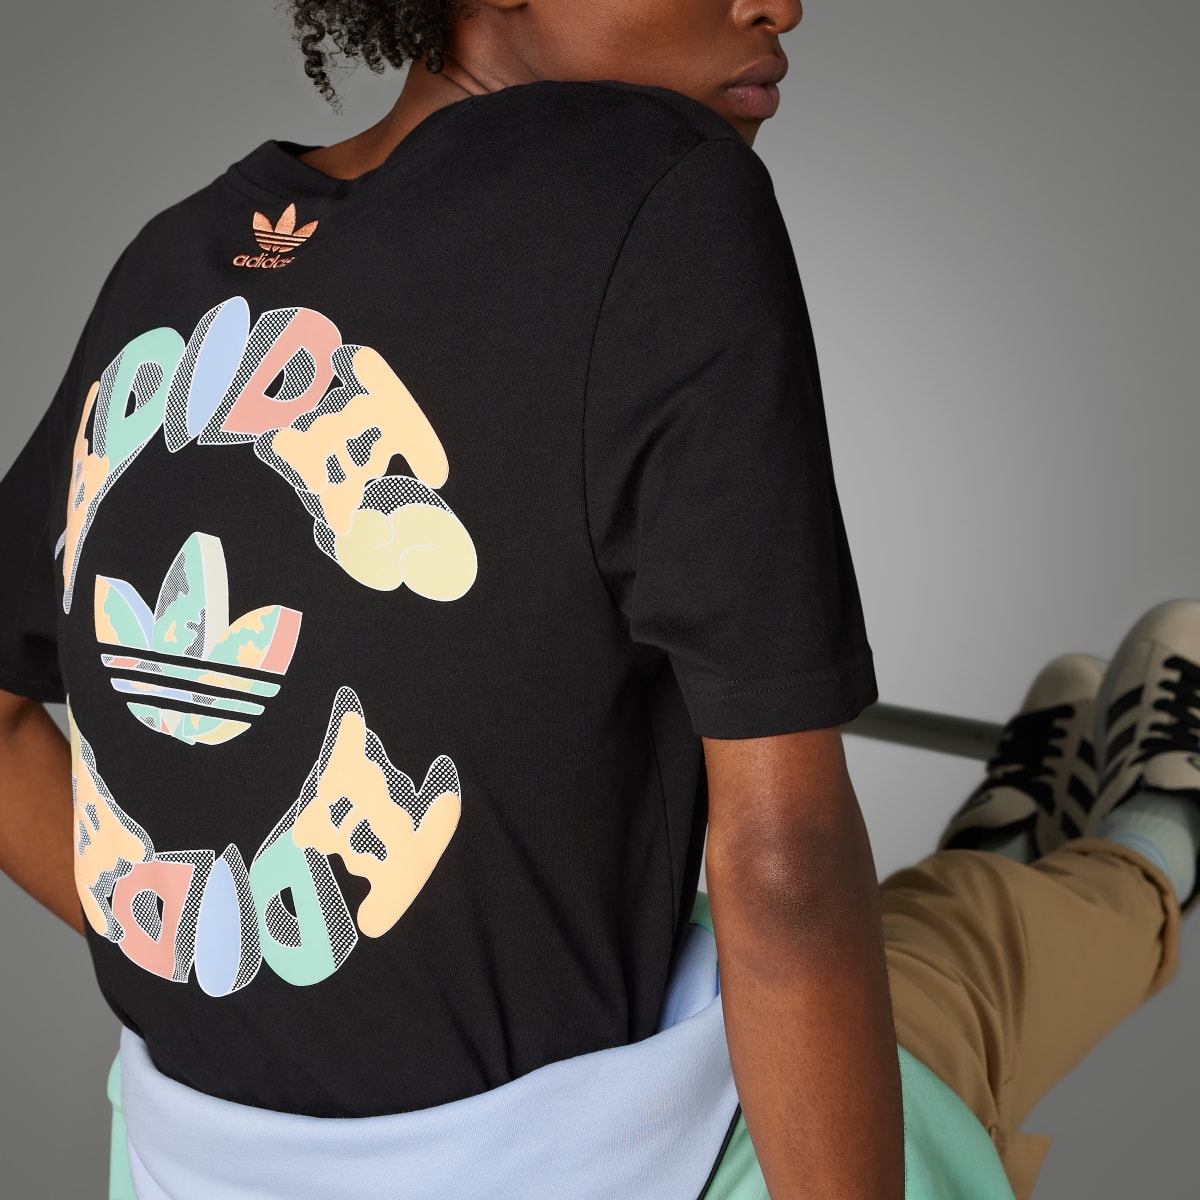 Adidas T-shirt Enjoy Summer Front/Back Graphic. 6